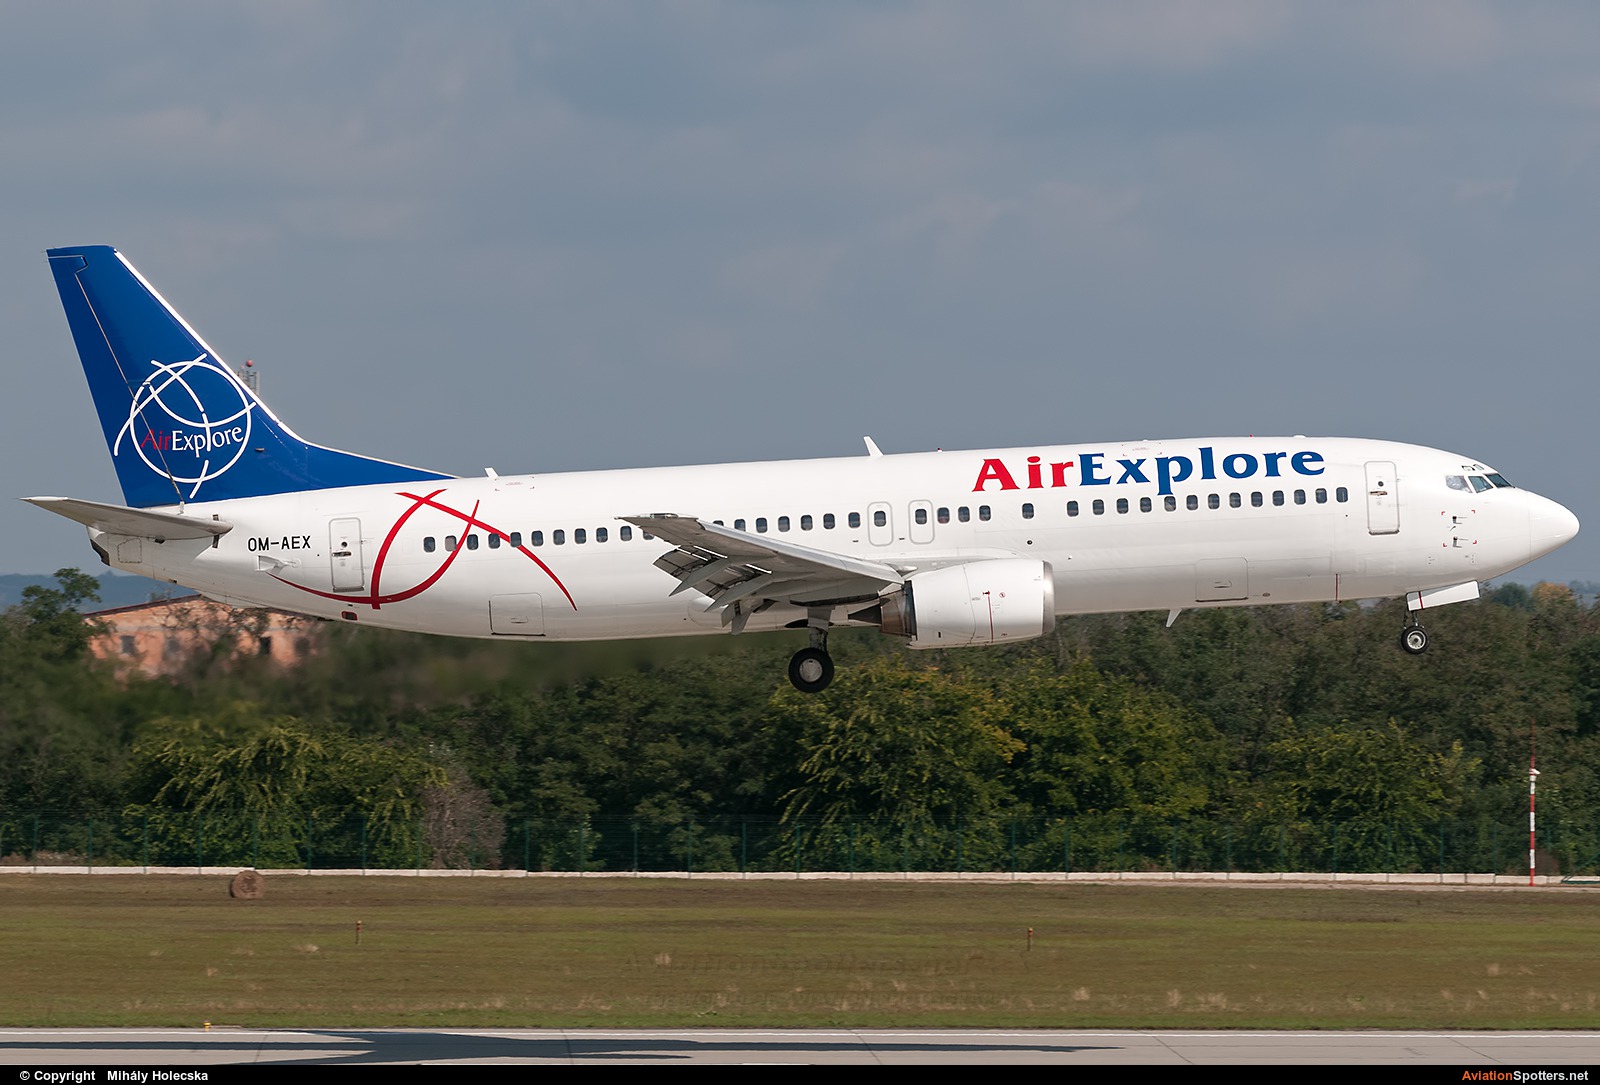 Air Explore  -  737-400  (OM-AEX) By Mihály Holecska (Misixx)